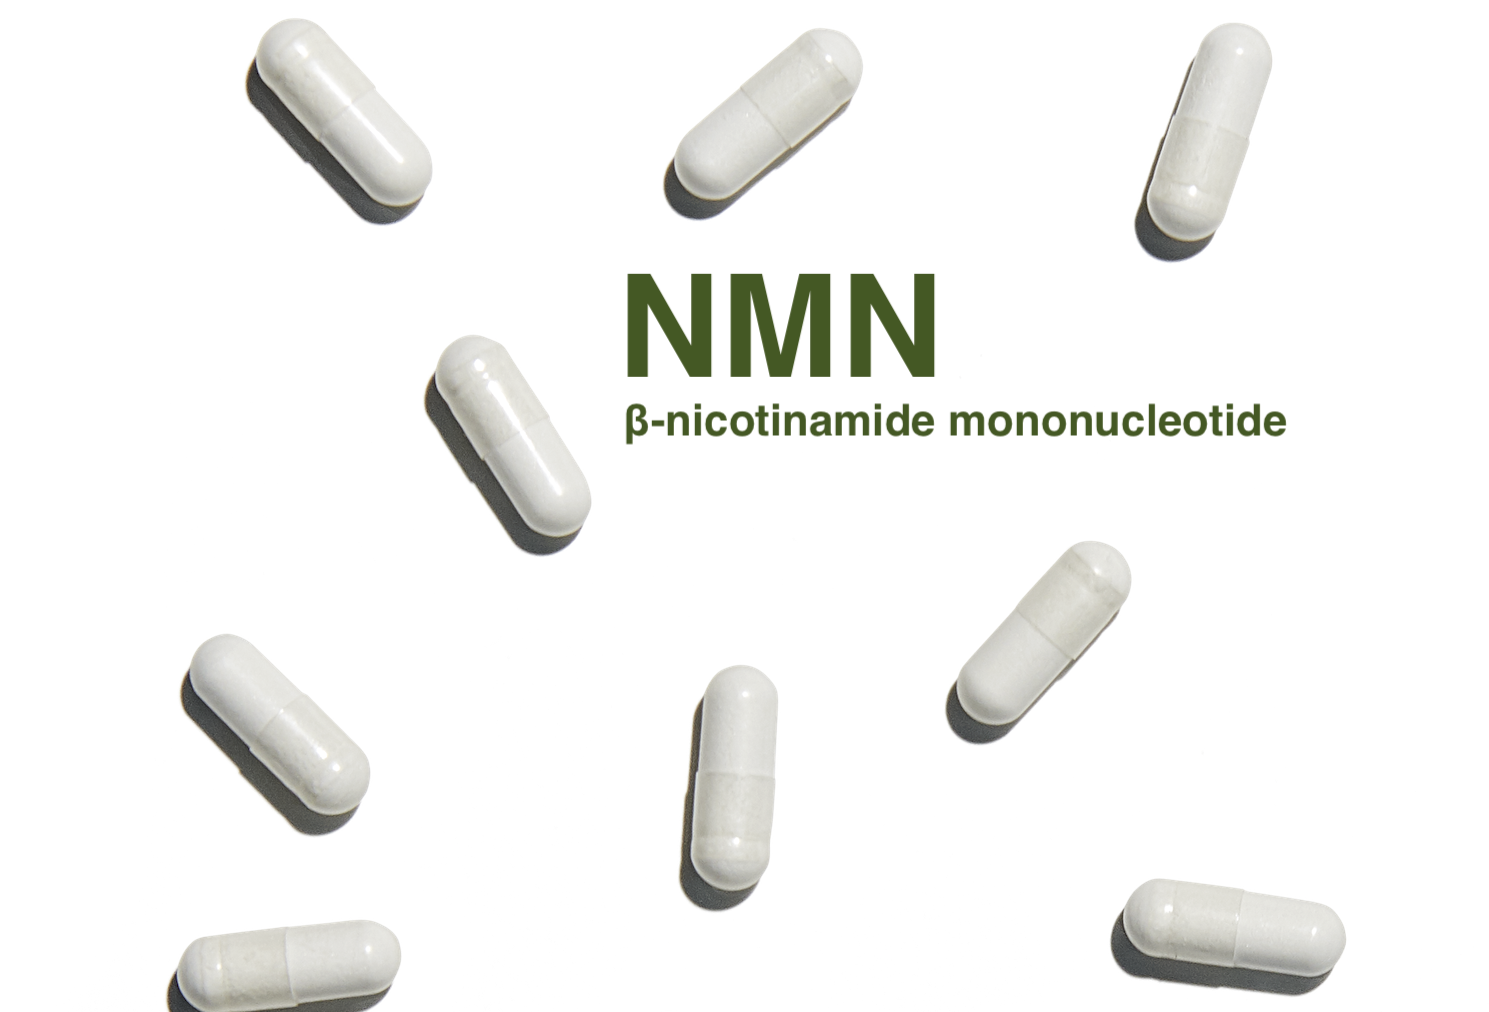 NMN: The Secret to Anti-Aging?